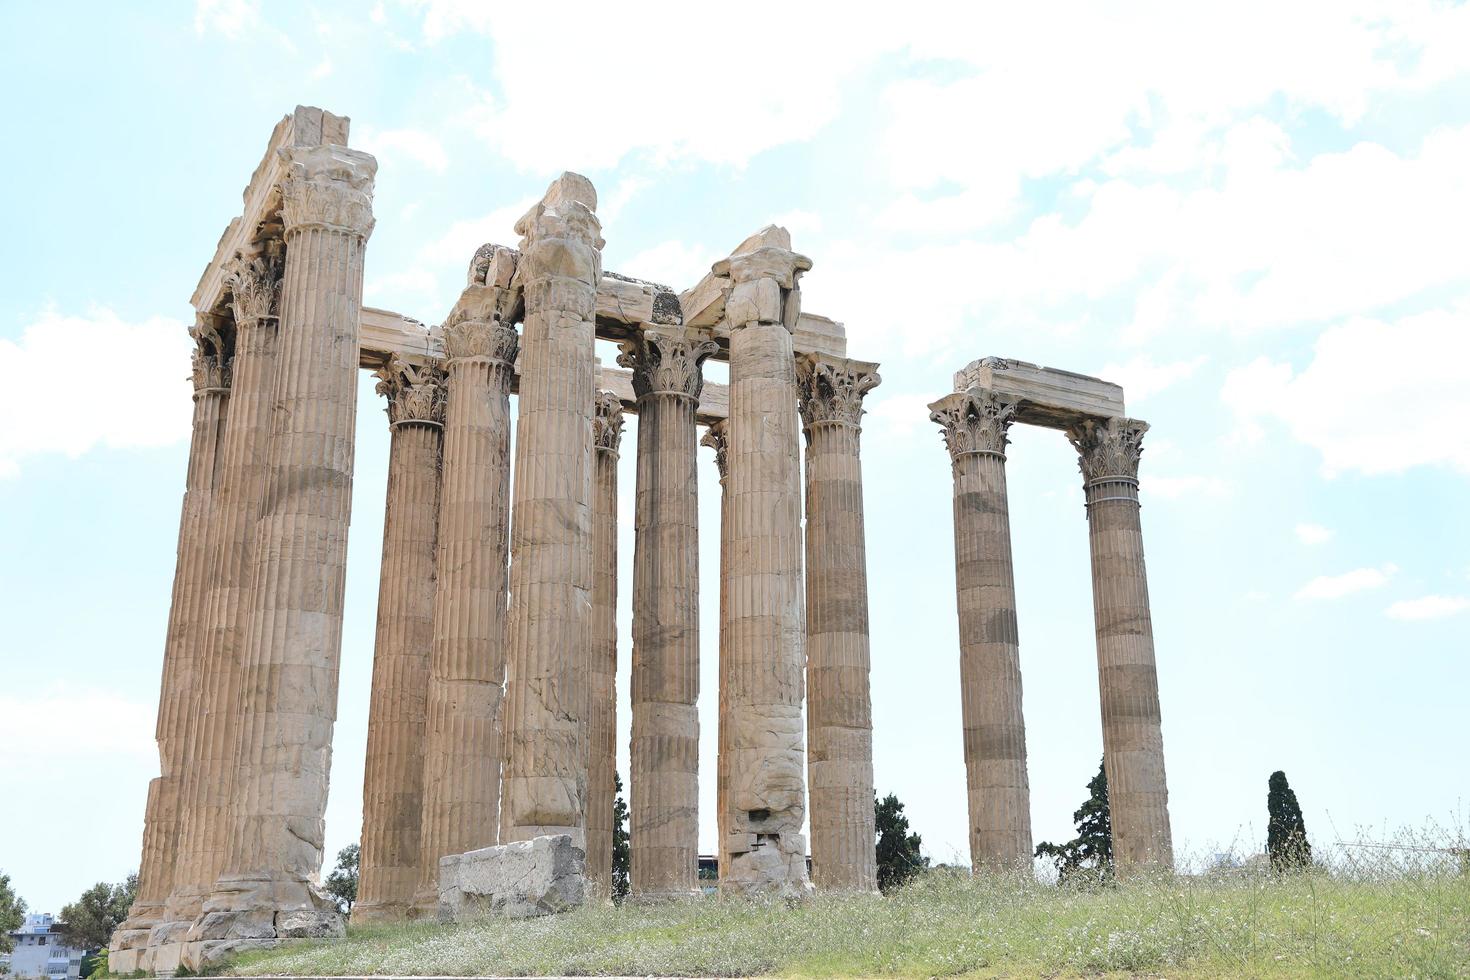 Temple of Olympian Zeus, Athens Greece photo